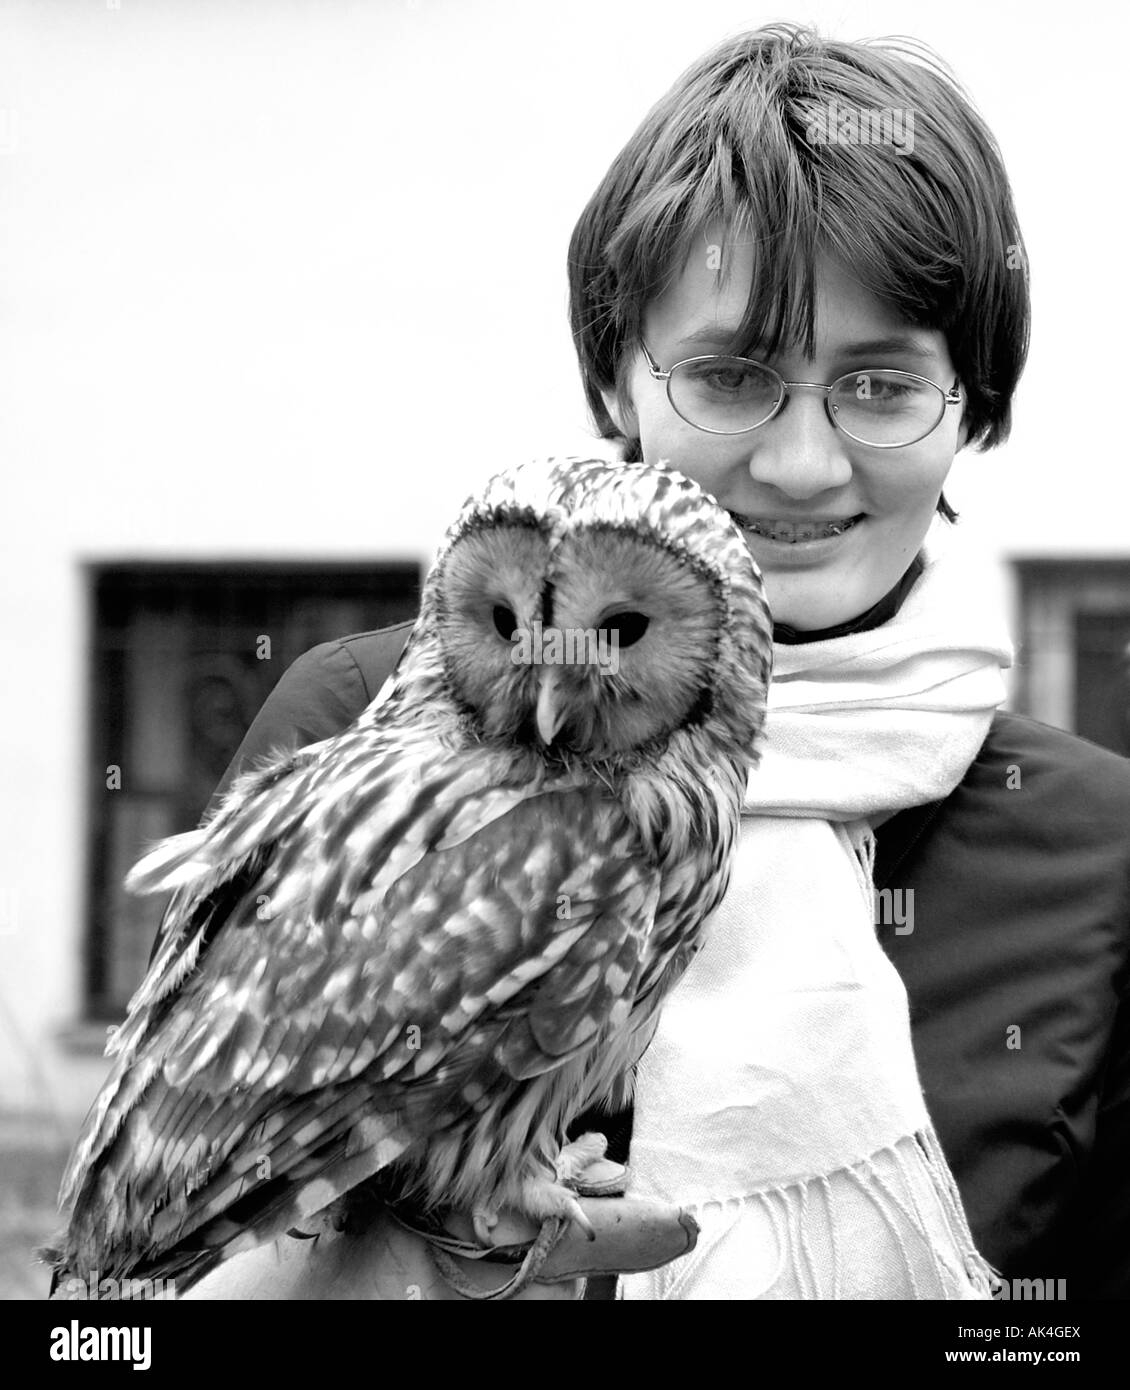 Girl wearing glasses holds a twany owl Strix aluco Stock Photo